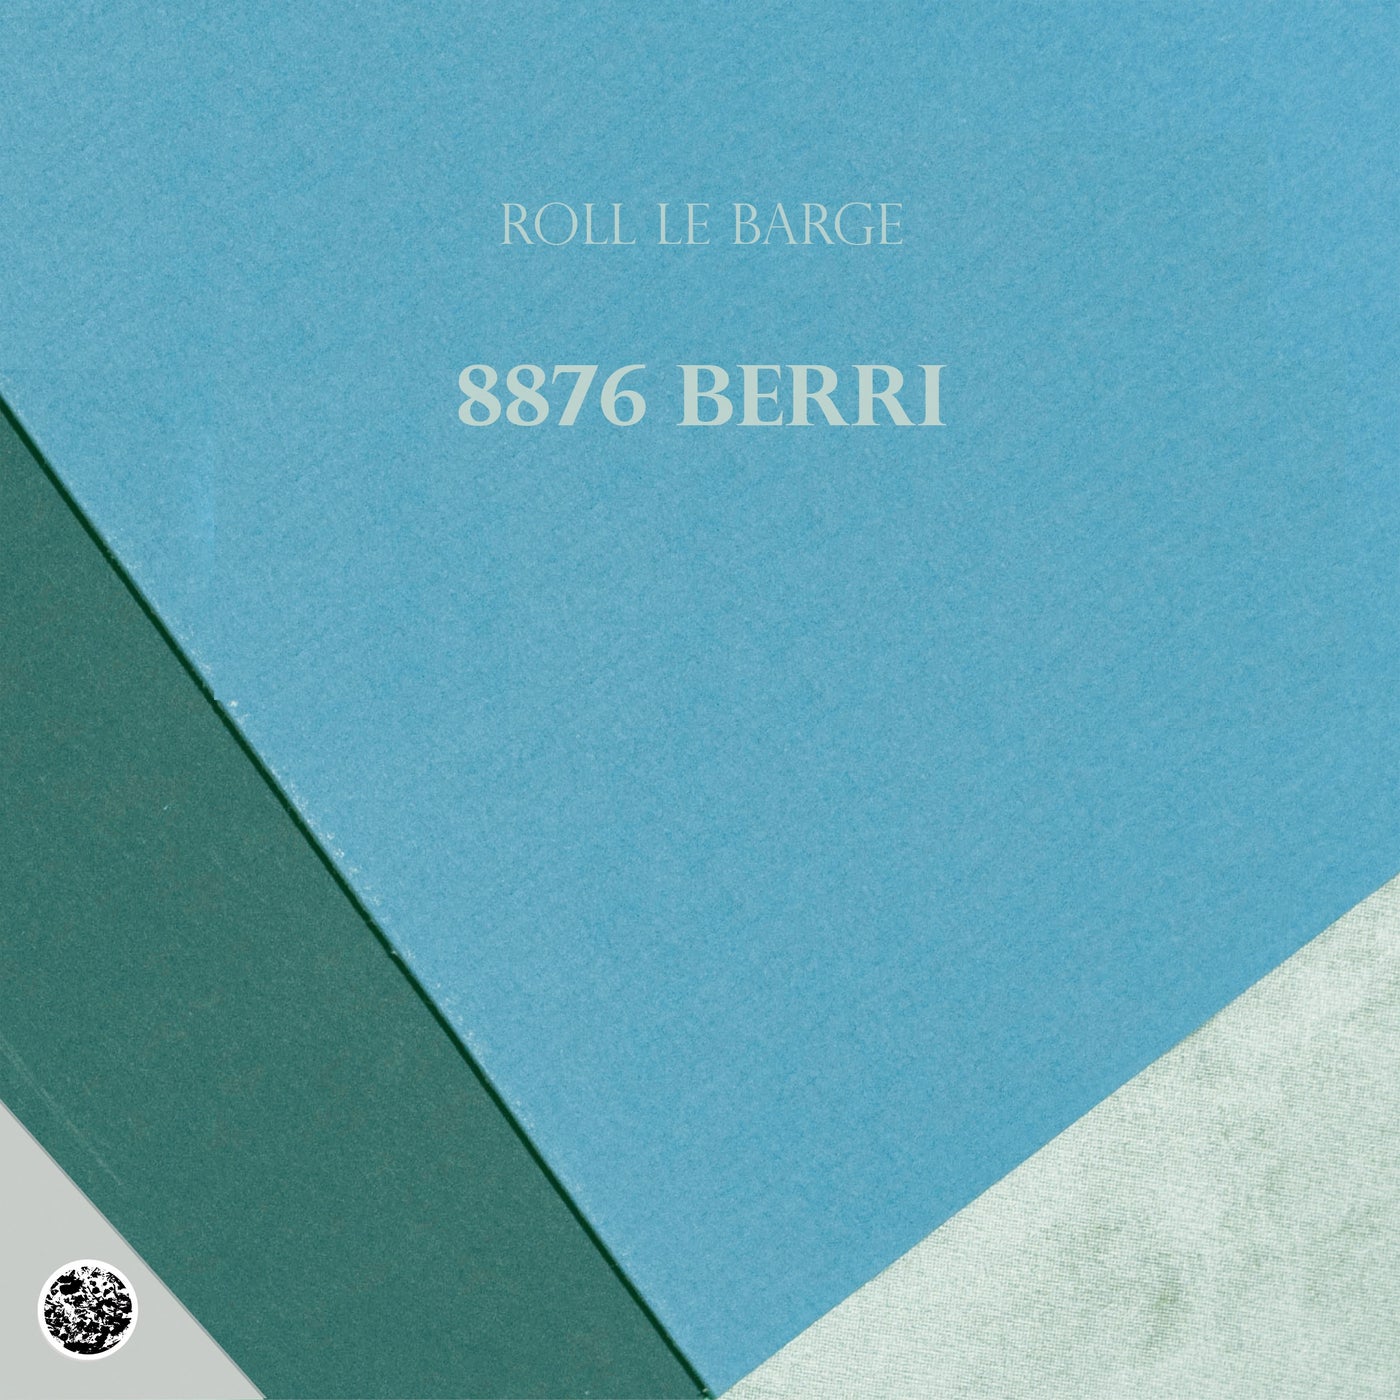 Download 8876 Berri on Electrobuzz